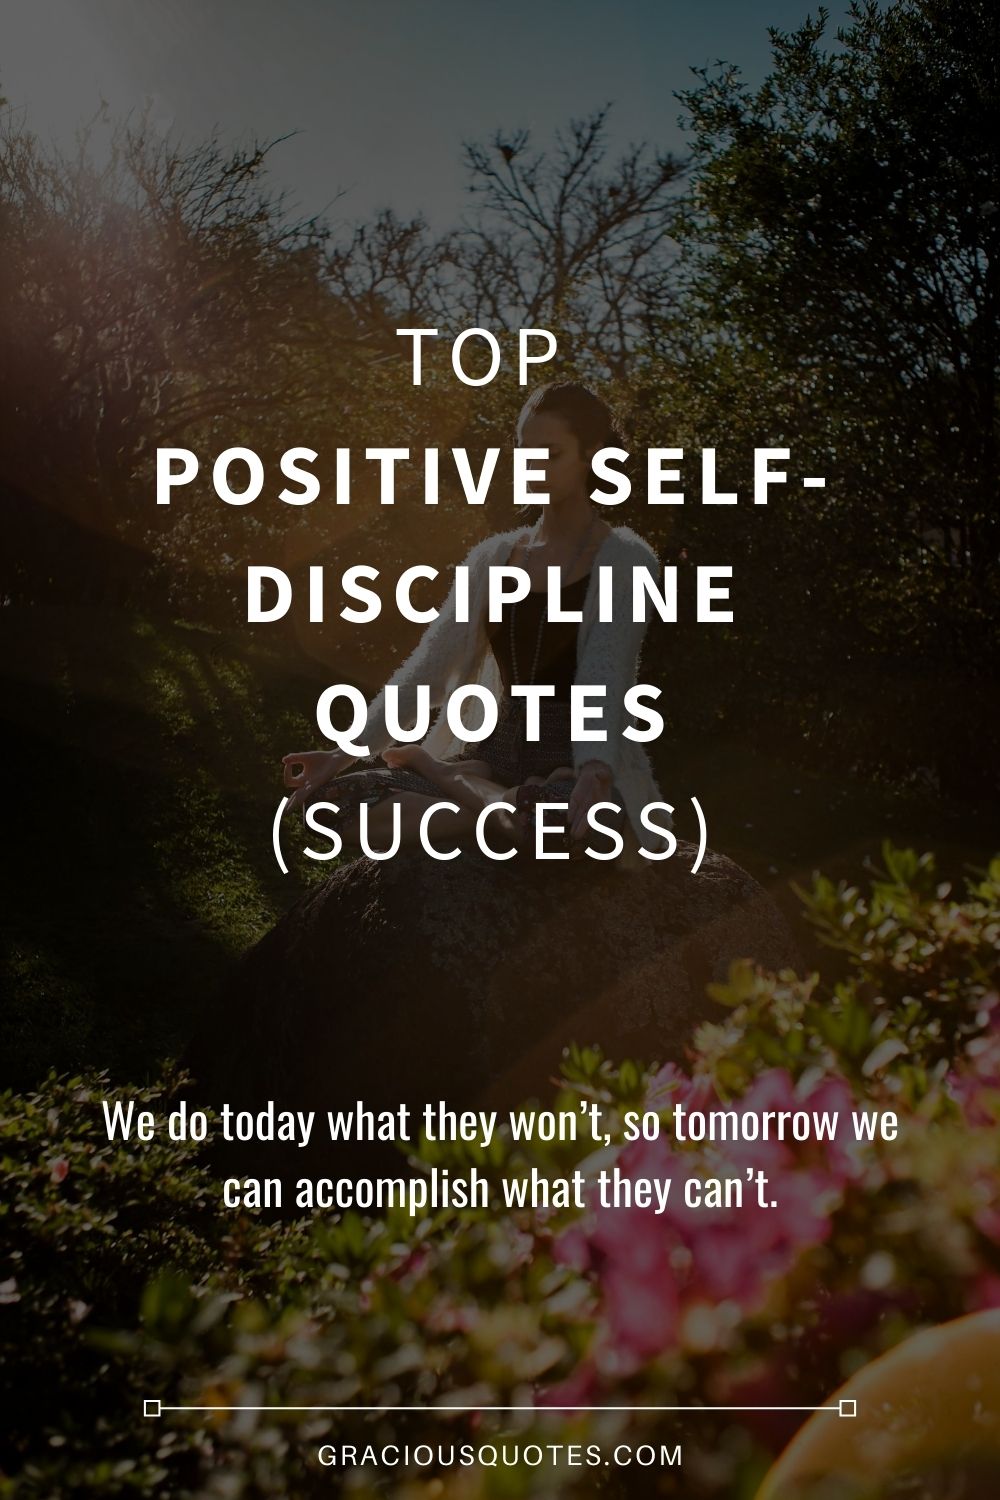 Top Positive Self-discipline Quotes (SUCCESS) - Gracious Quotes